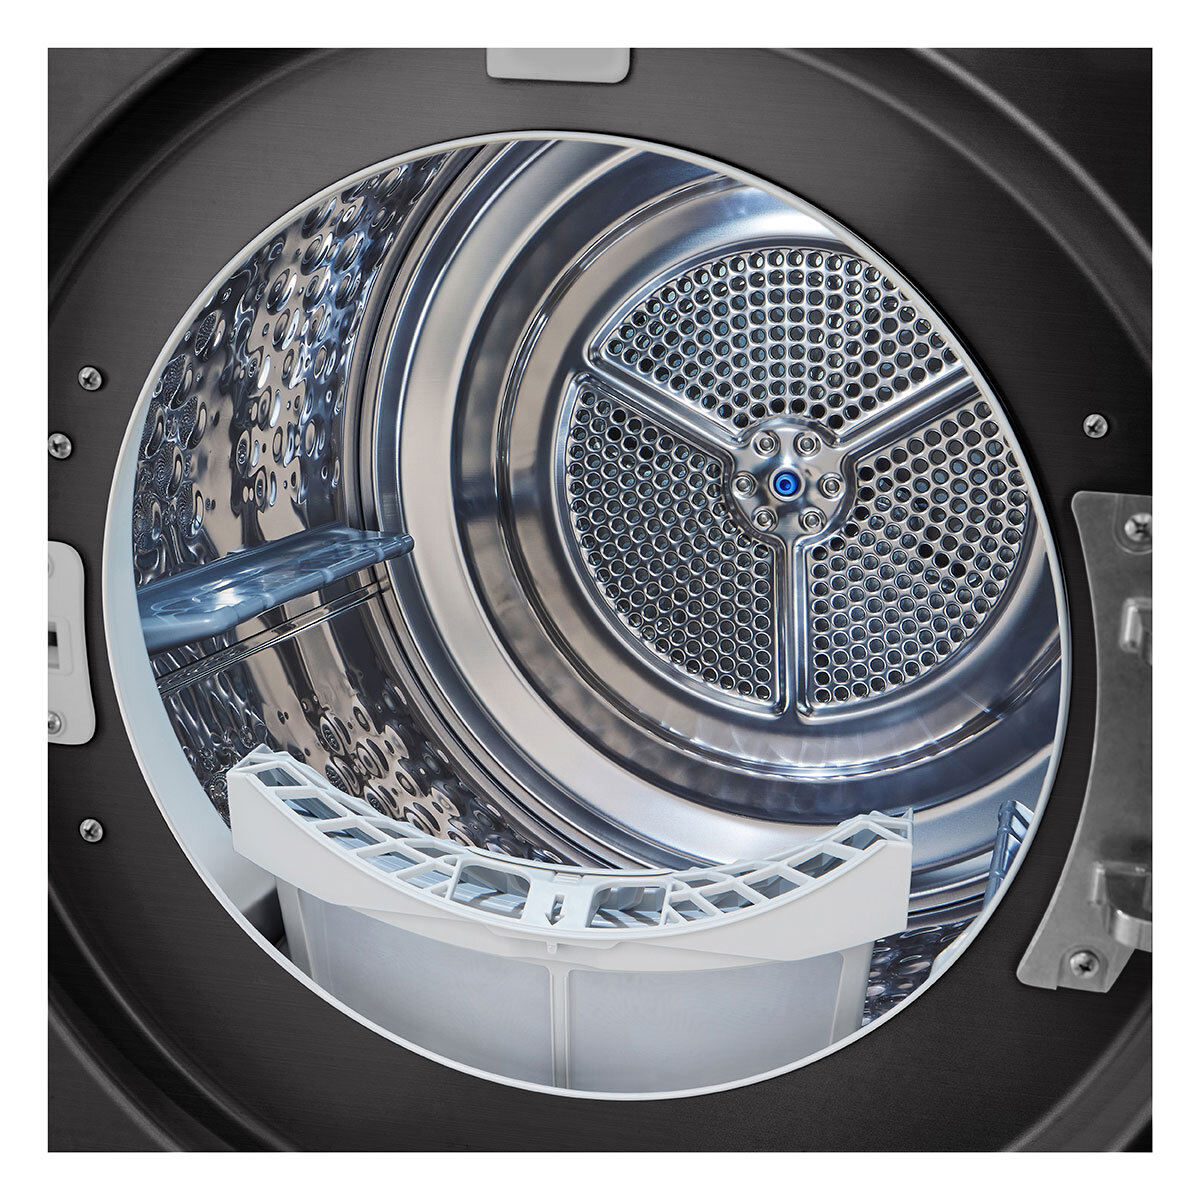 Drum LG FDV909BN DUAL Dry Freestanding Heat Pump Tumble Dryer, 9kg Load, Platinum Black